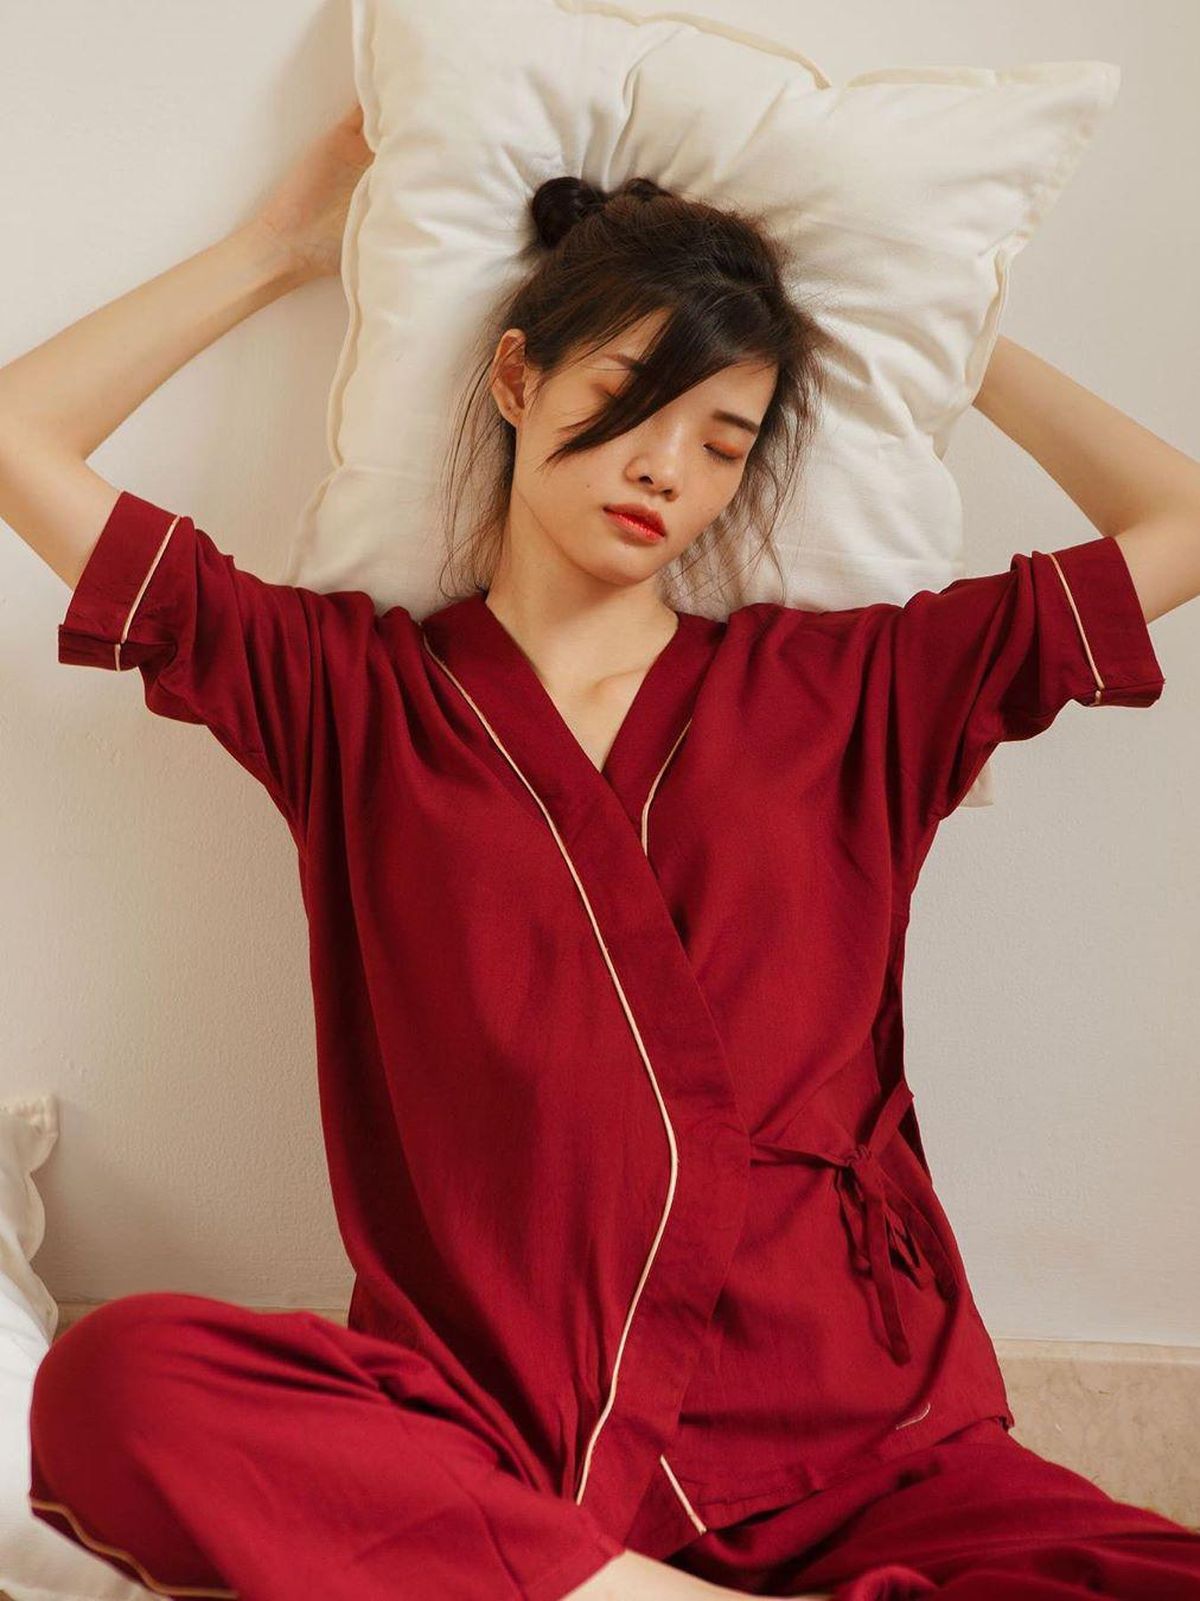 Baju tidur Motif Piyama Dewasa 3 in 1 / Baju Tidur IMPORT Lengan Pendek  baju rumah santai bahan katun